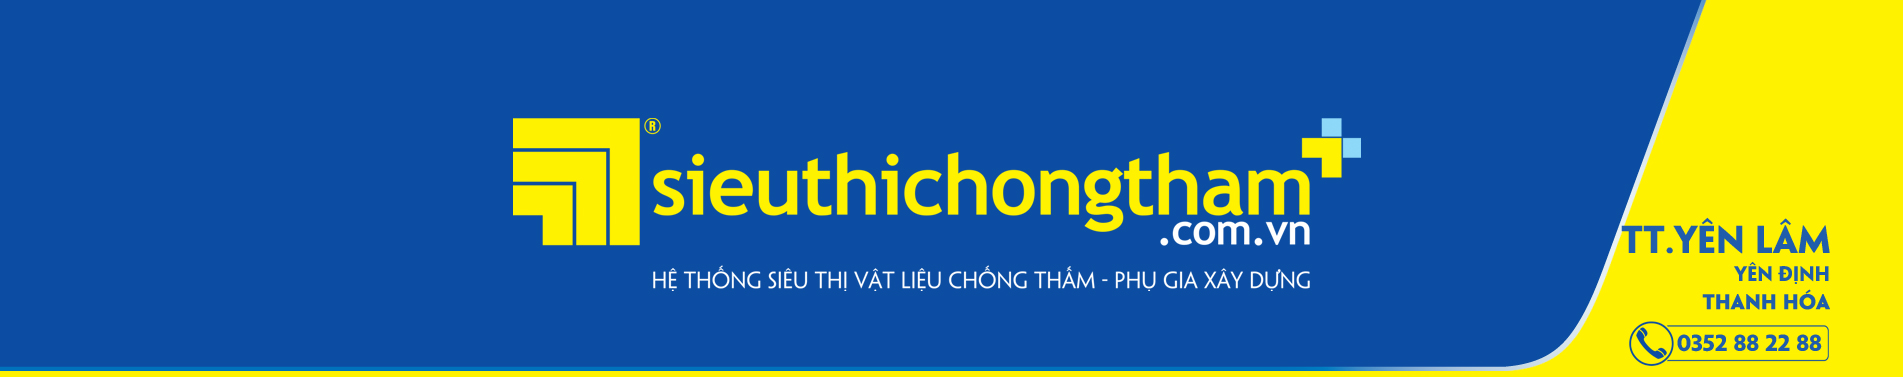 Tan Nhat Minh Banner